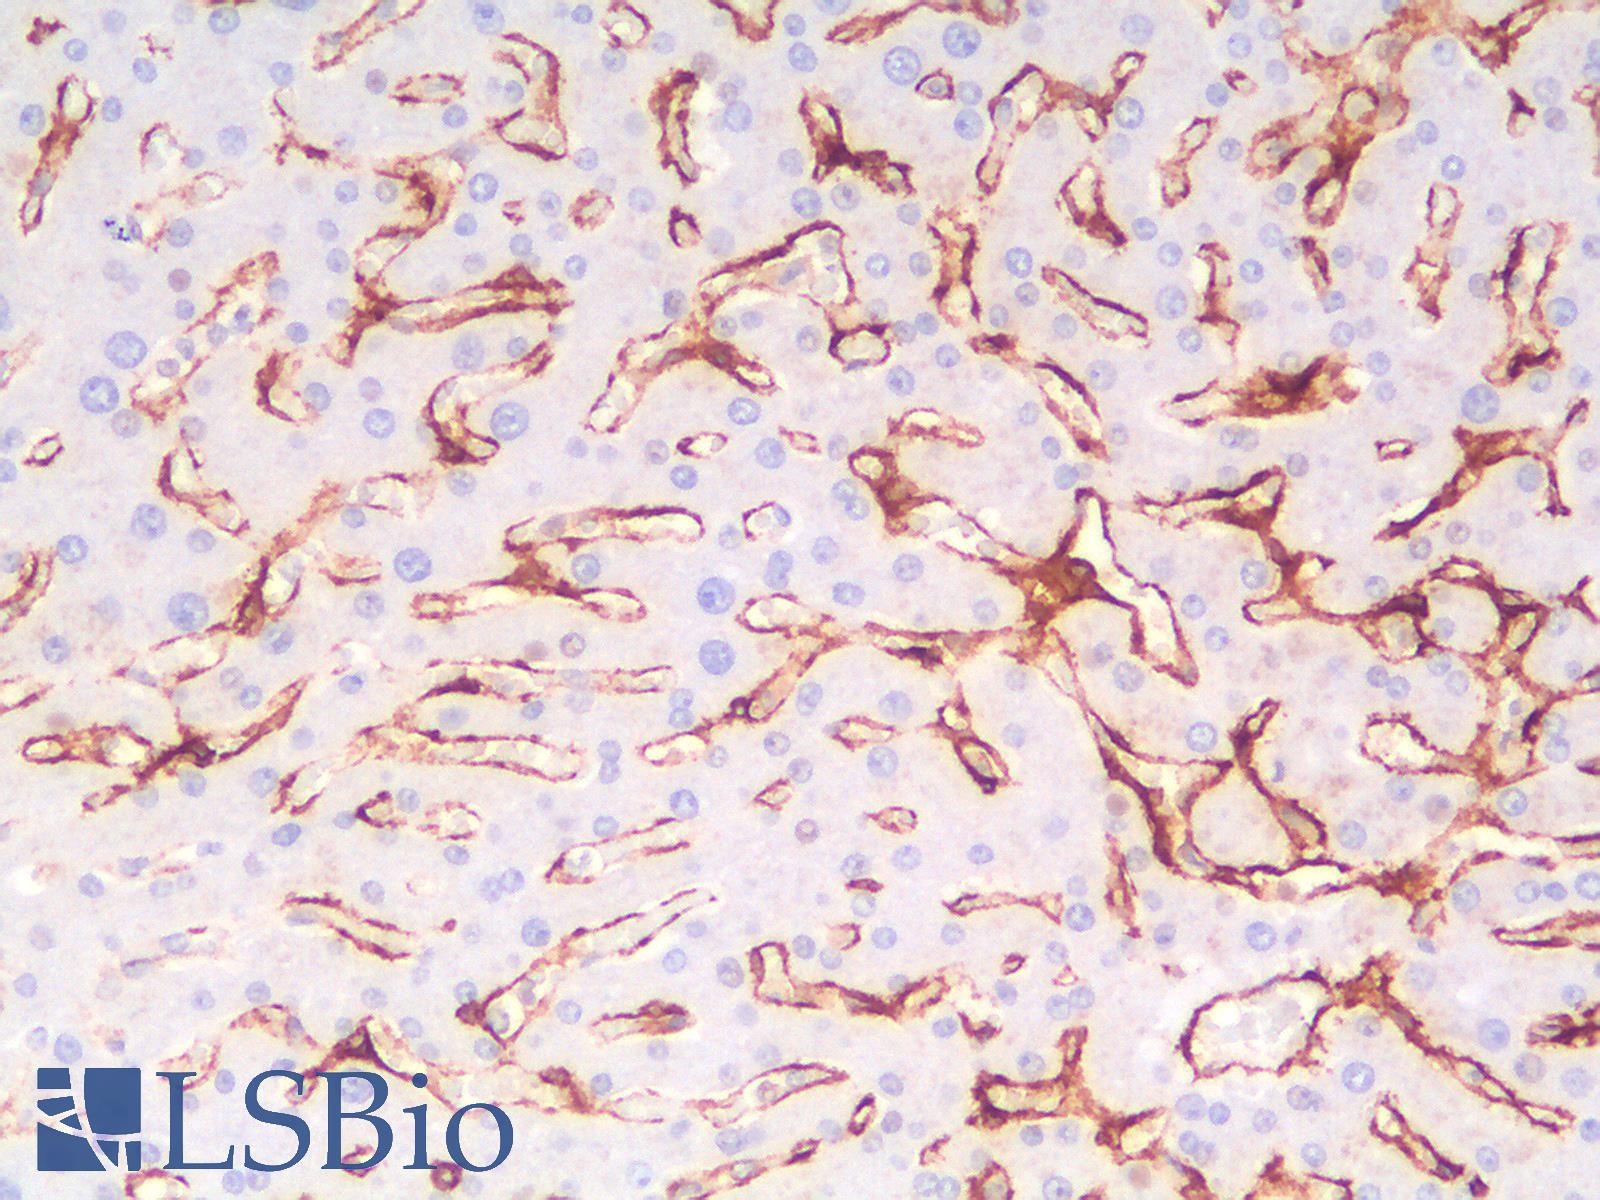 THBD / CD141 / Thrombomodulin Antibody - Human Liver: Formalin-Fixed, Paraffin-Embedded (FFPE)